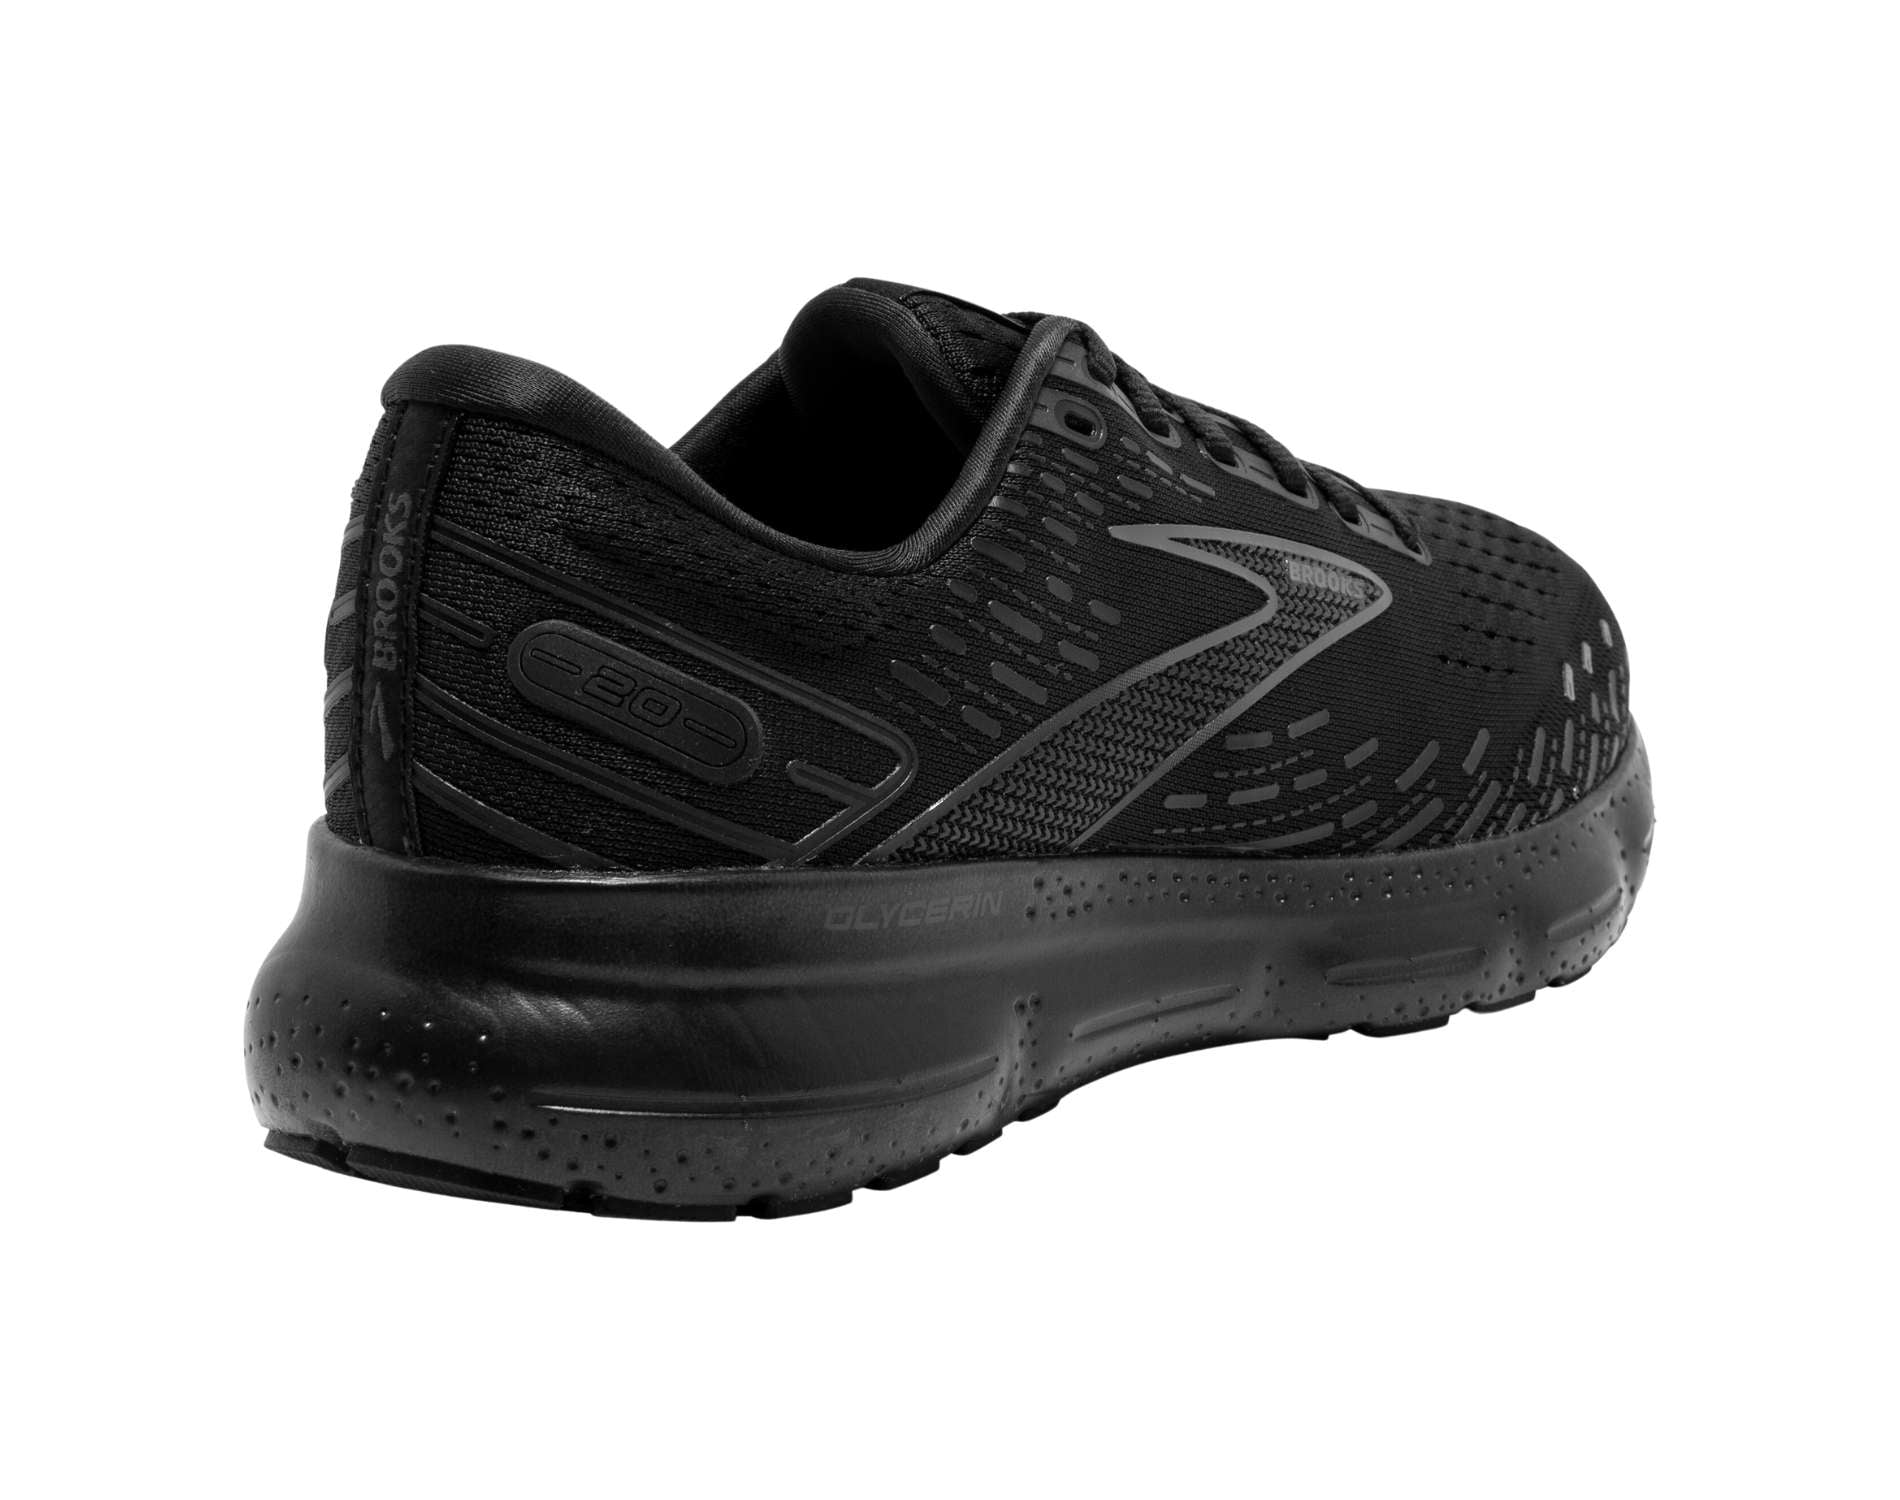 Brooks Glycerin 20 in b width womens running shoe in black colour